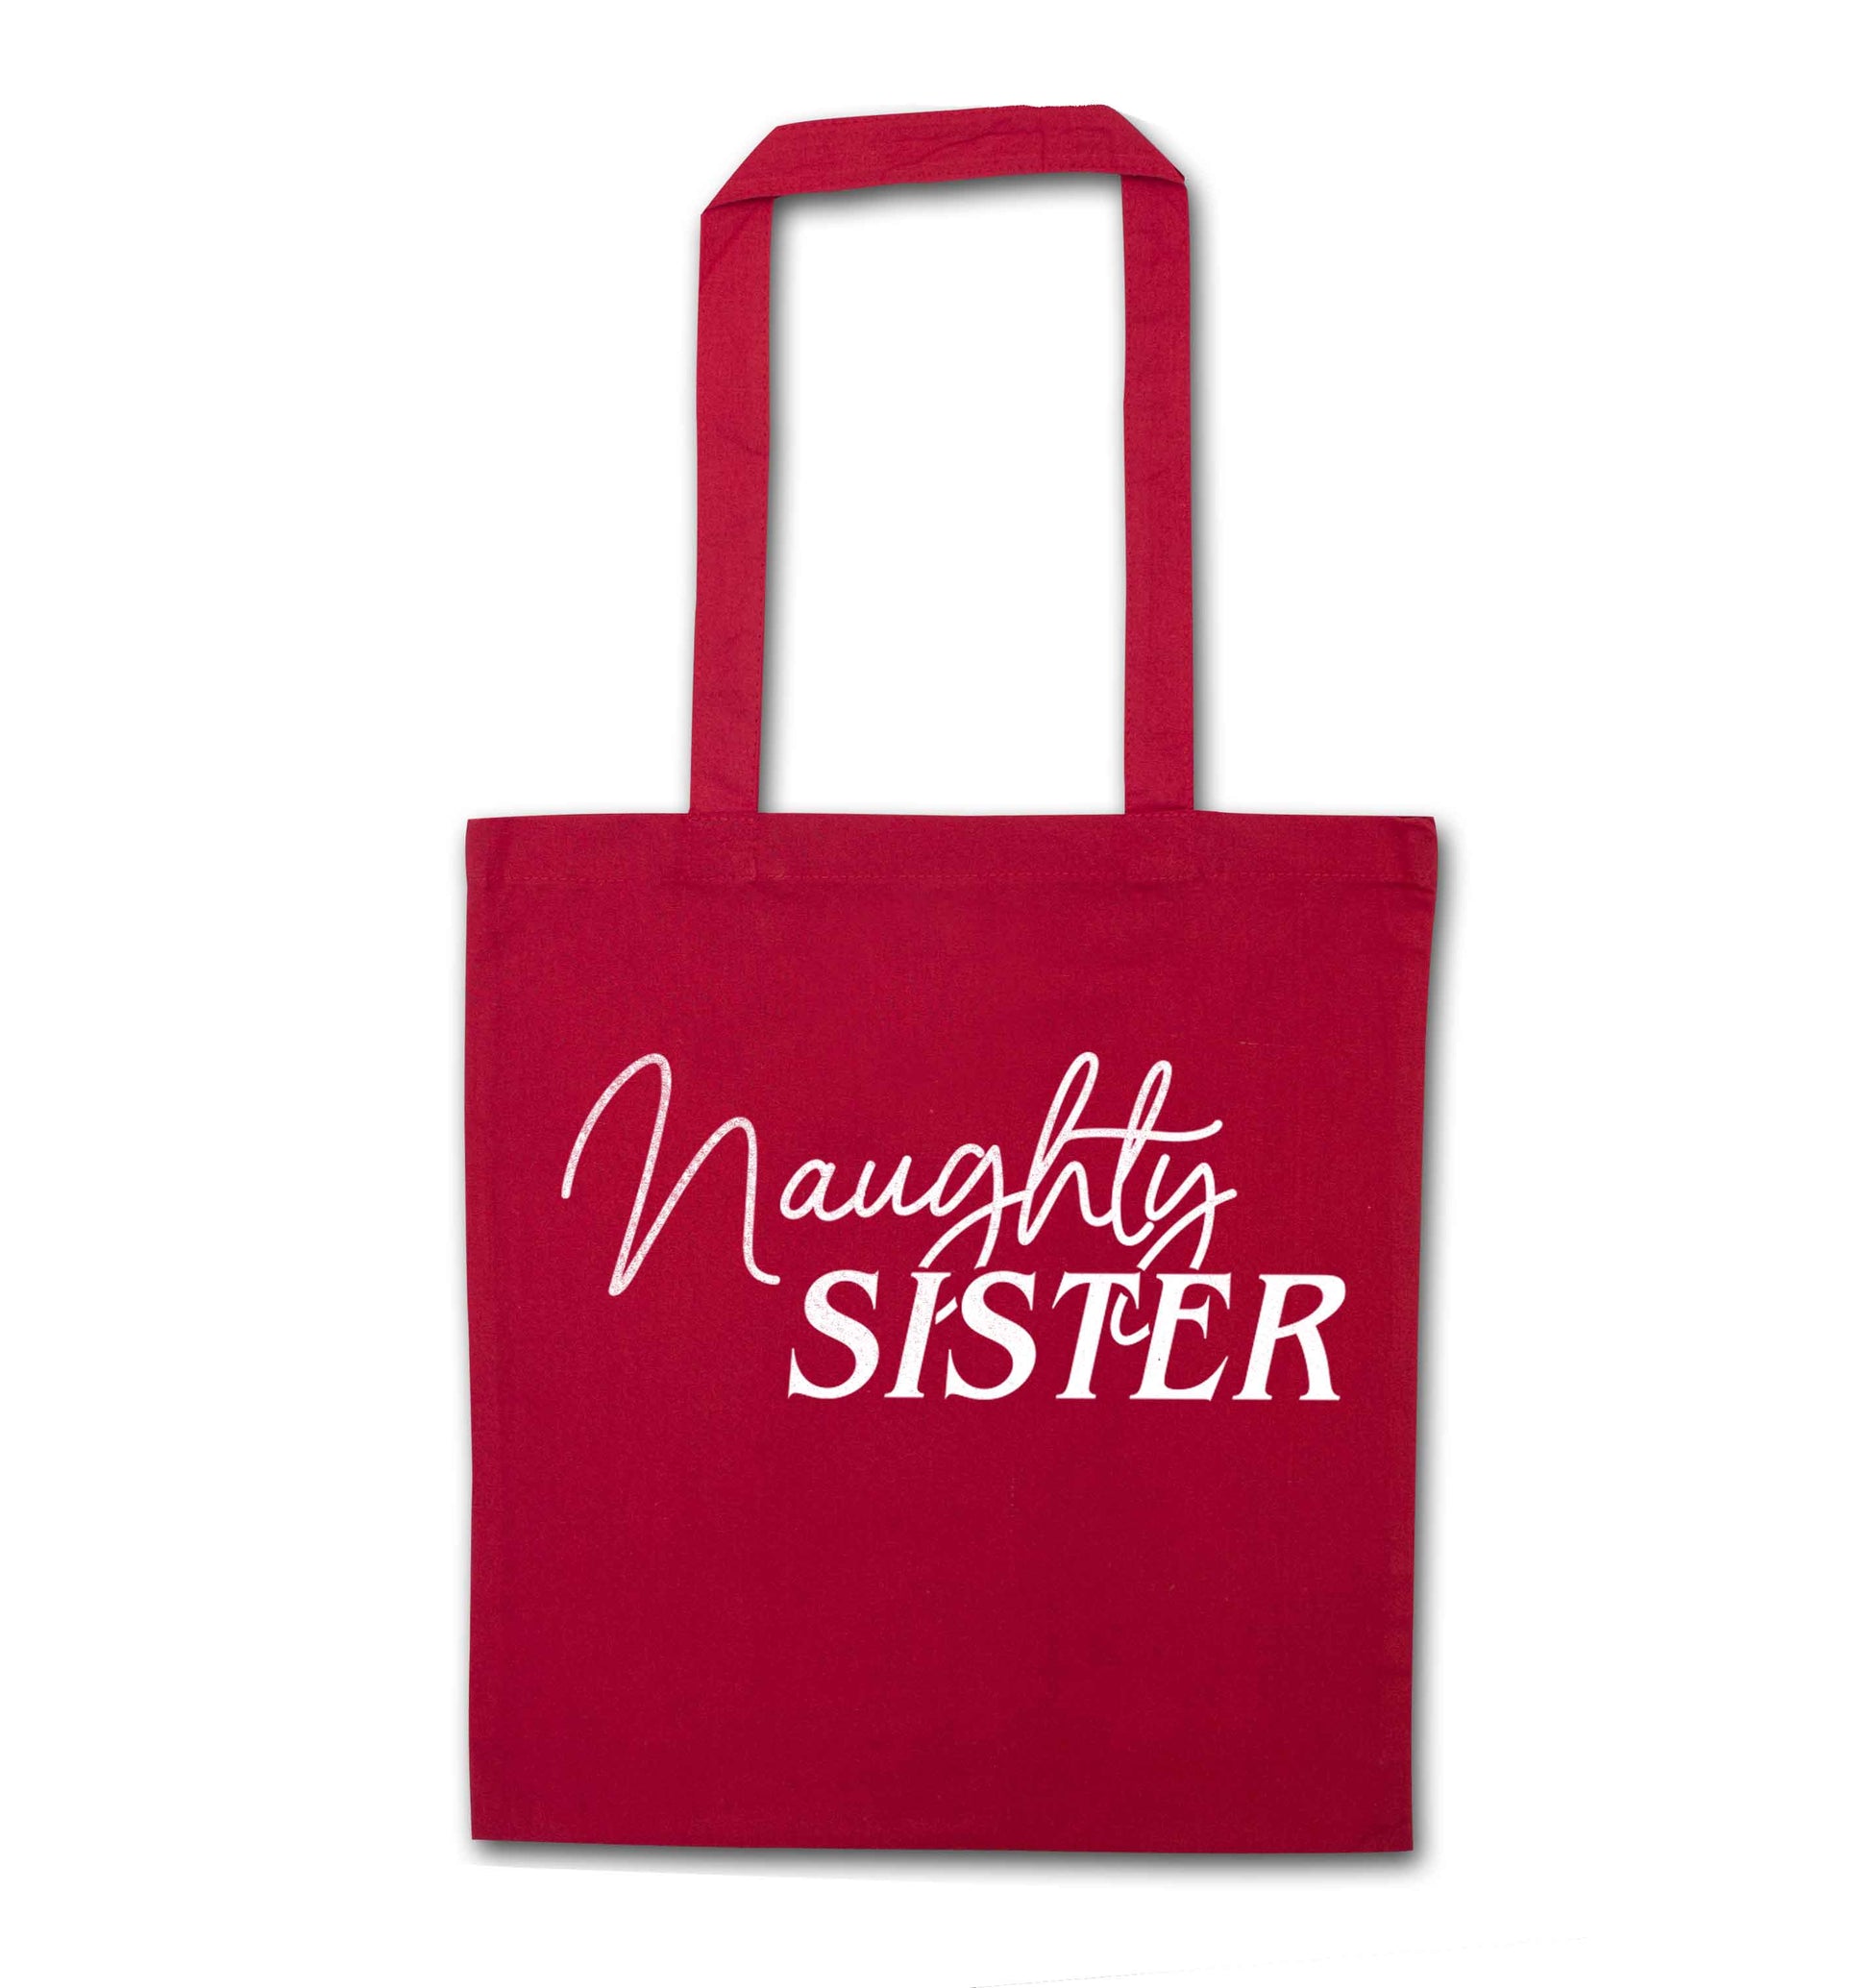 Naughty Sister red tote bag